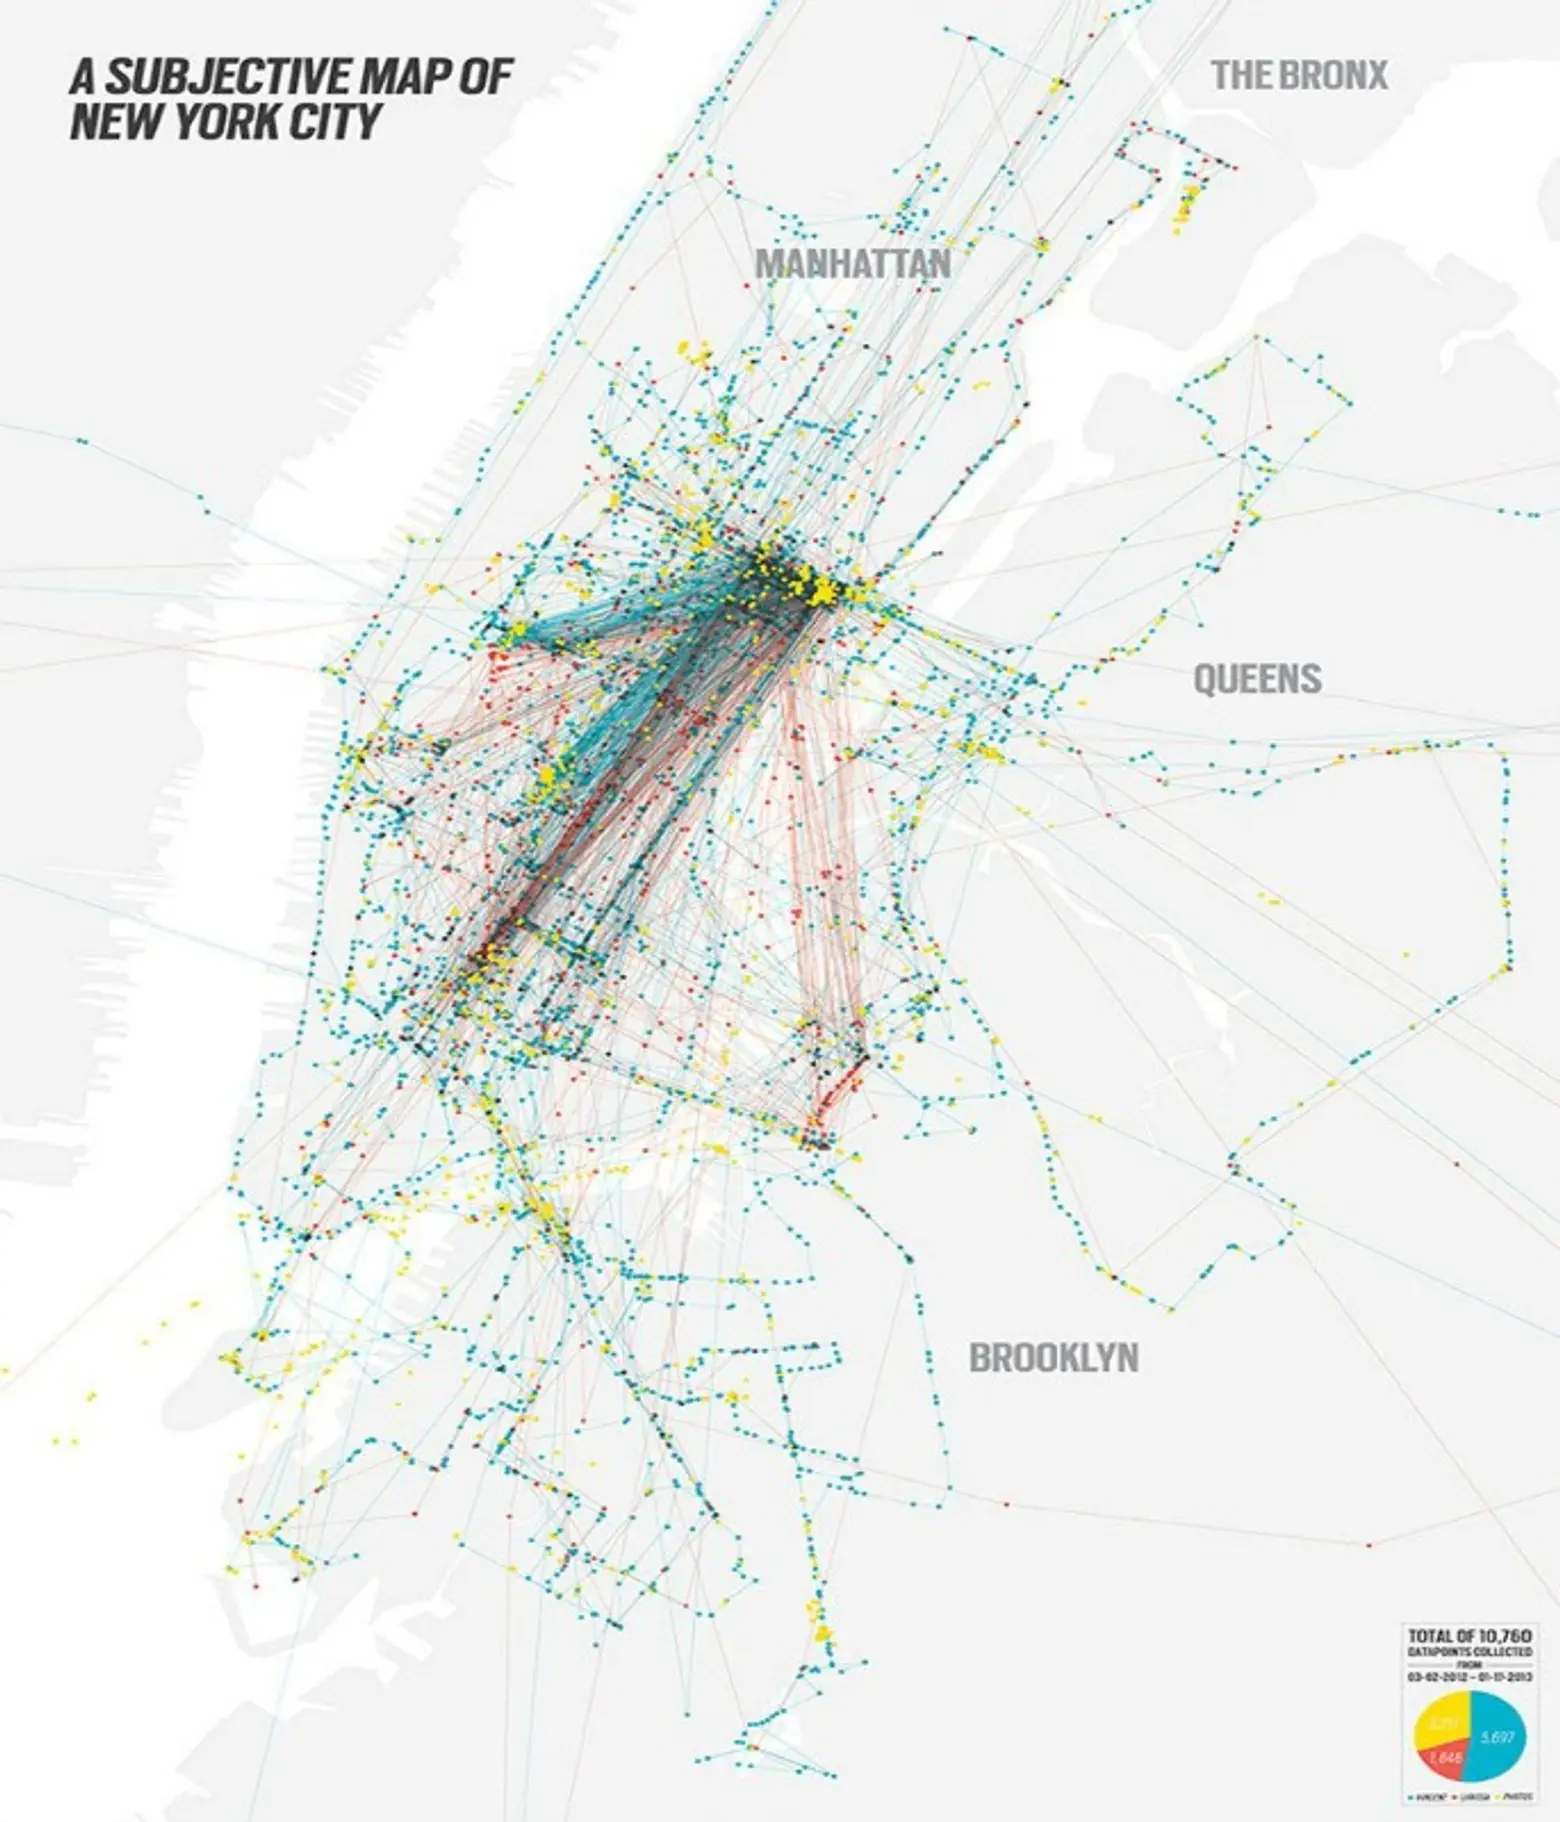 Vincent Meertens' Subjective Map of NYC